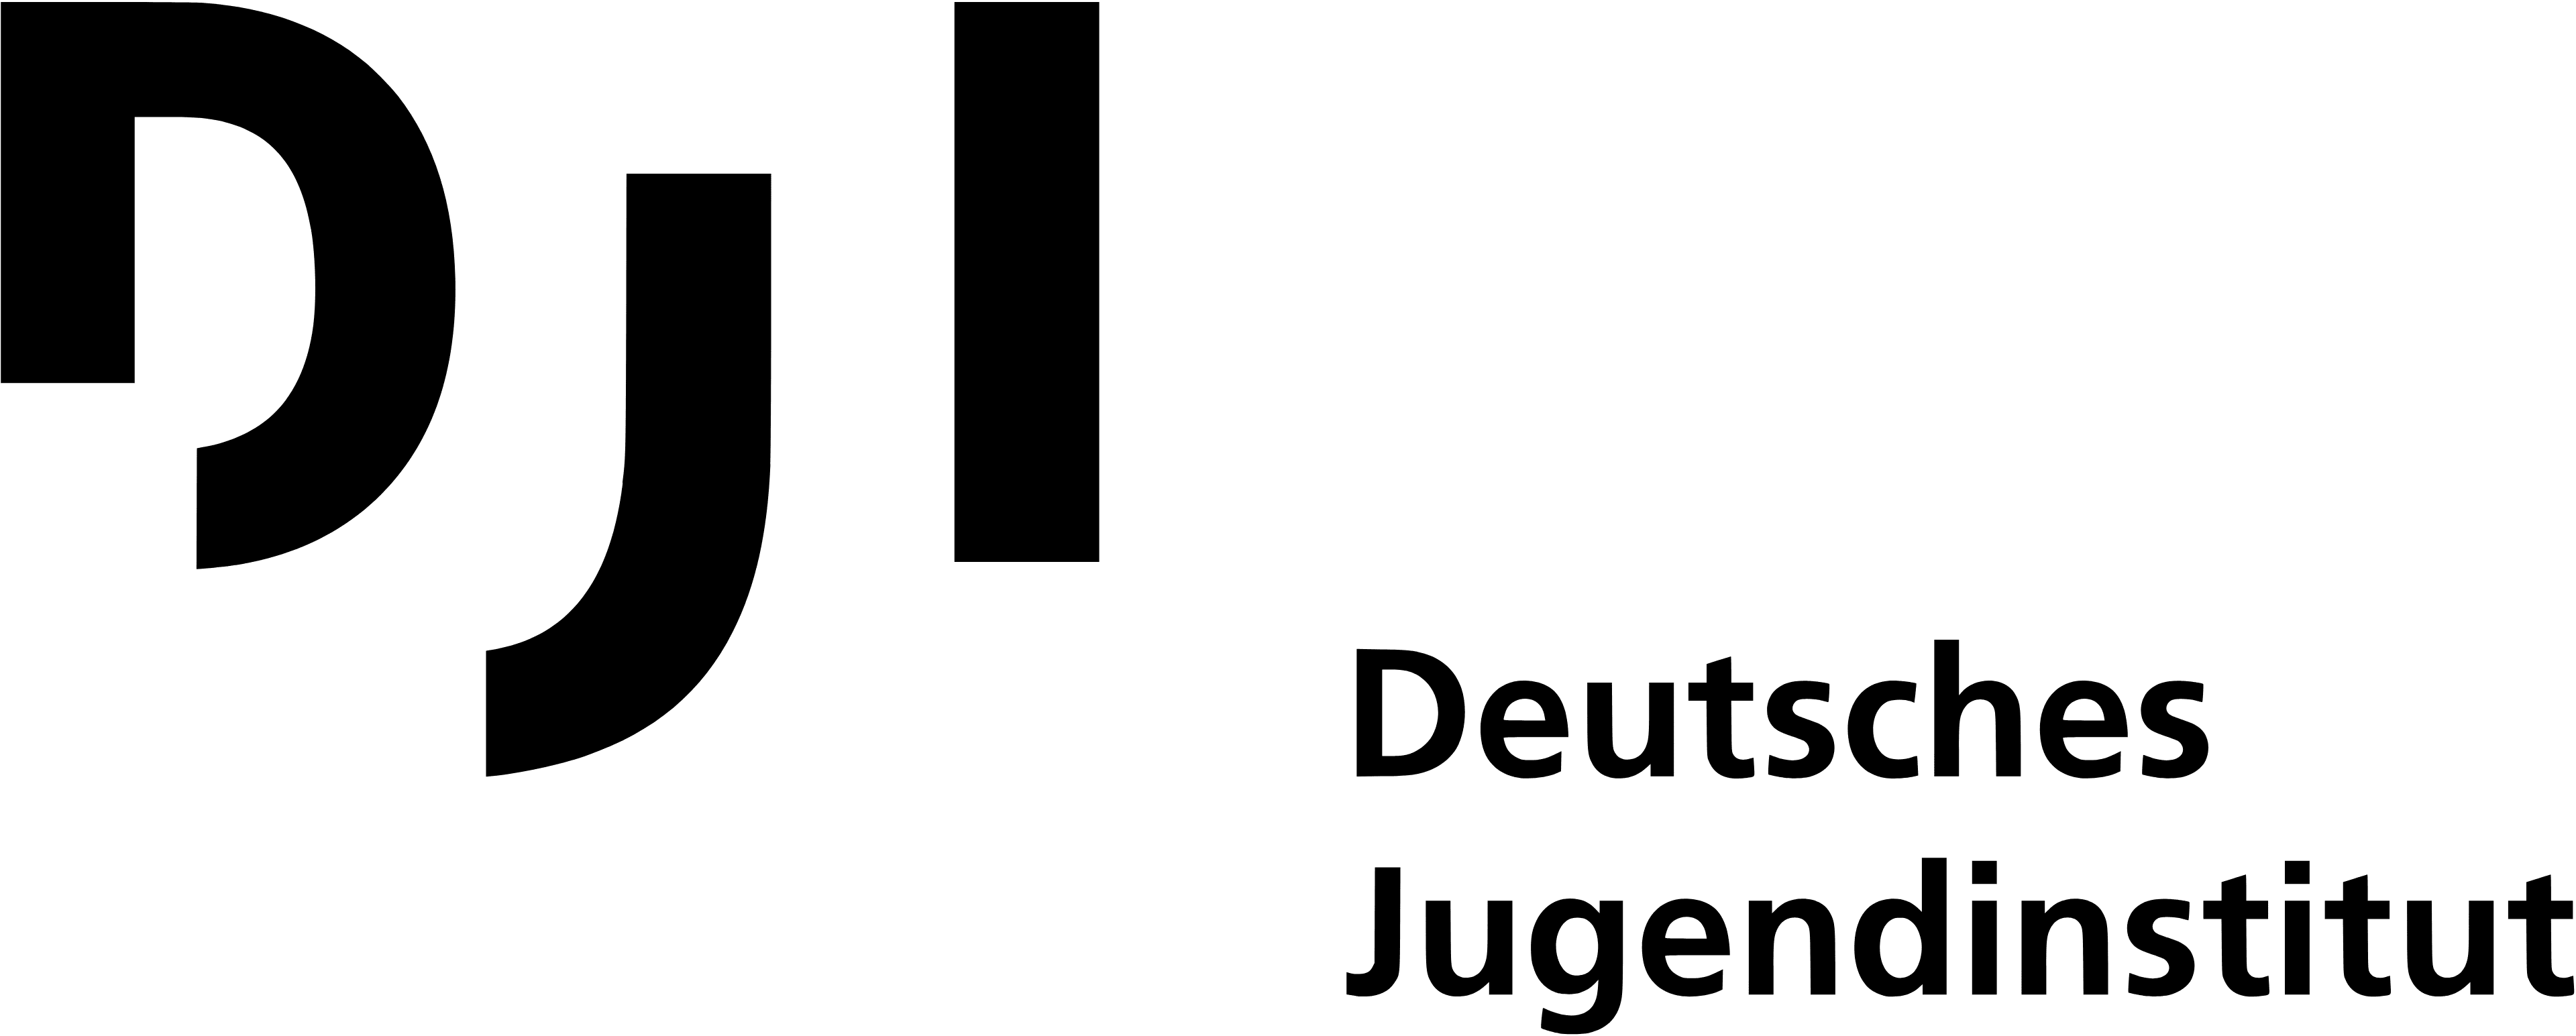 Deutsches Jugendinstitut E.V. logo